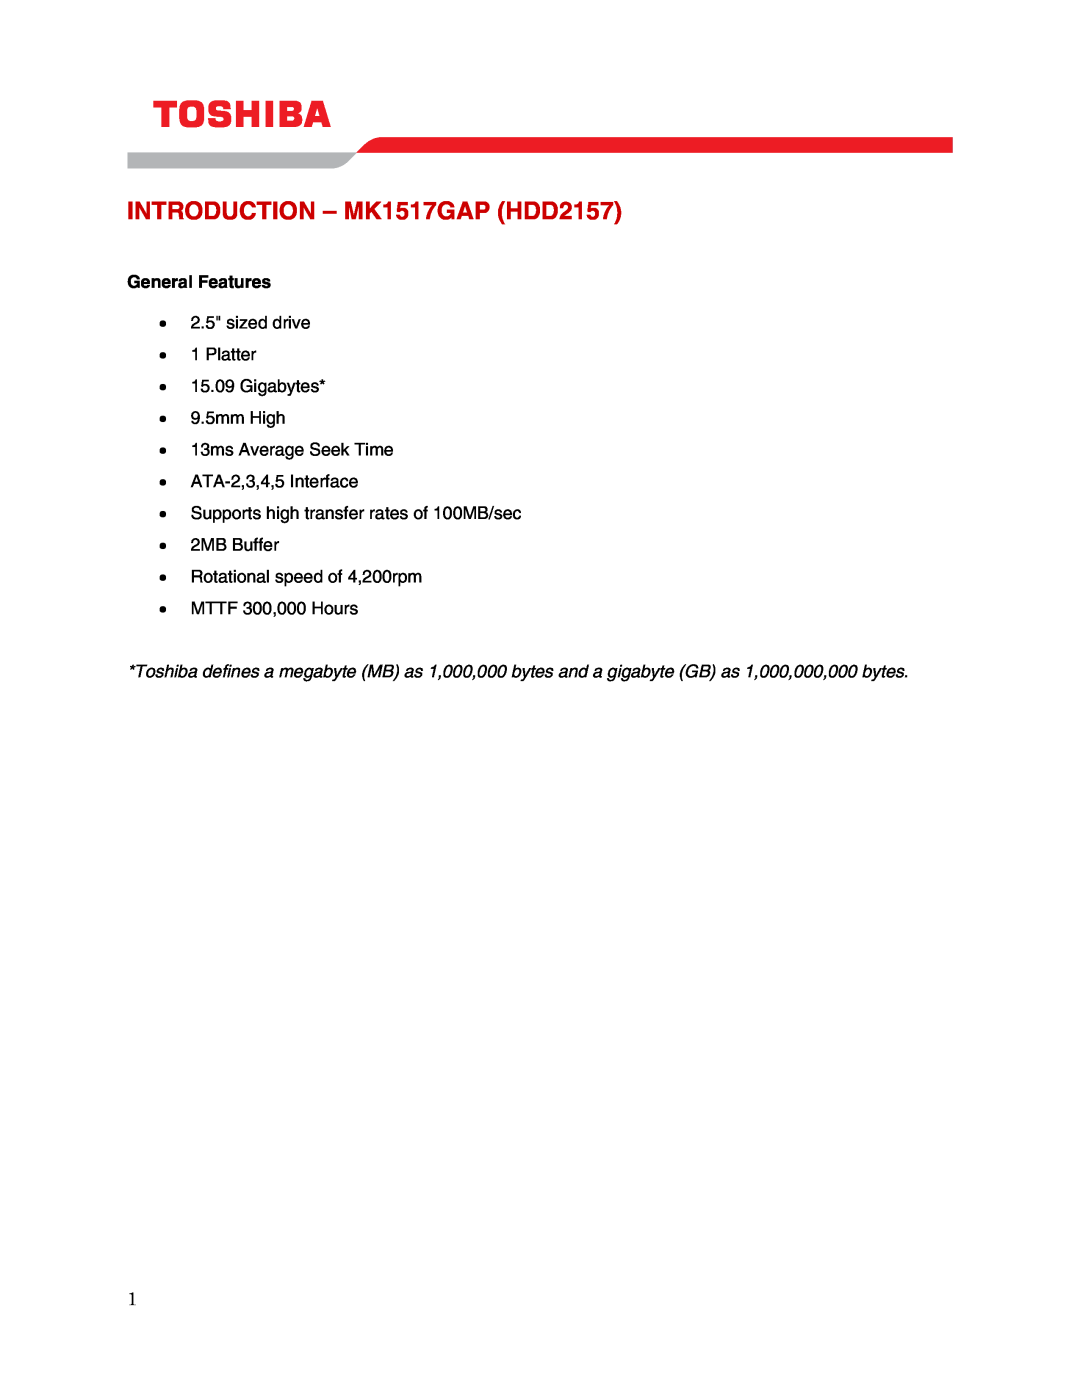 Toshiba MK1517GAP (HDD2157) user manual INTRODUCTION - MK1517GAP HDD2157, General Features 